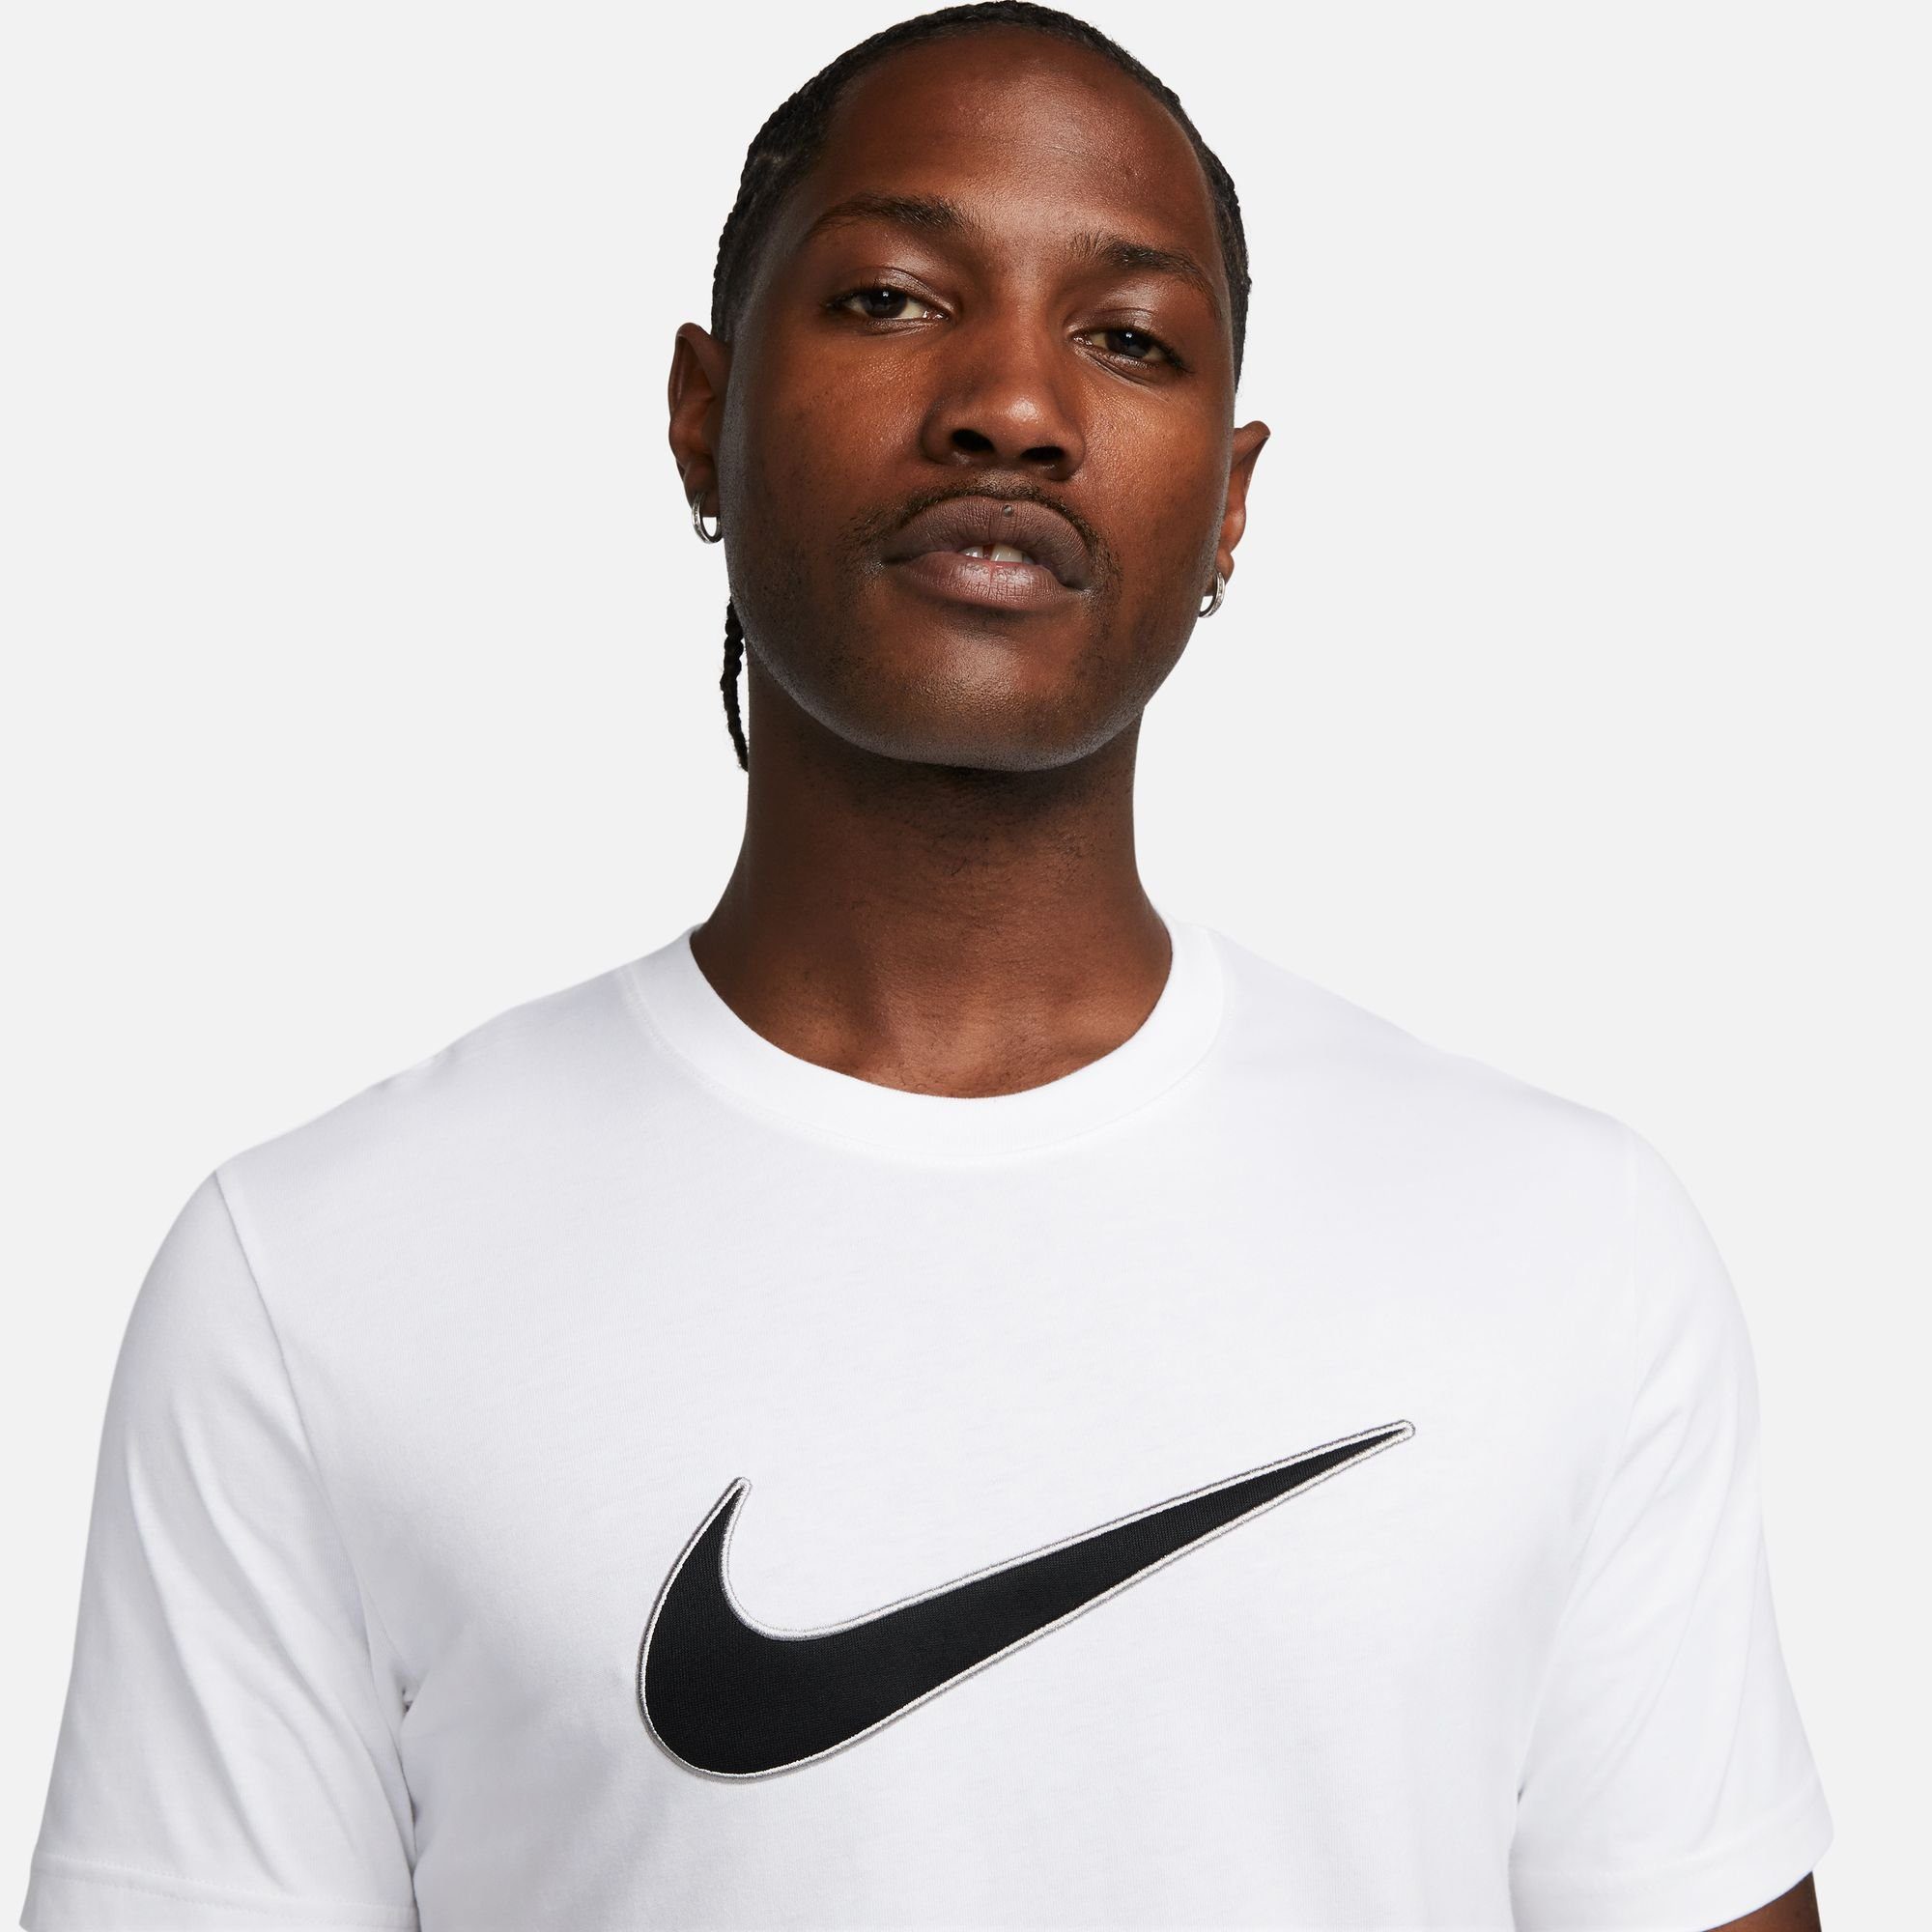 Nike Sportswear SS M T-Shirt TOP WHITE NSW SP